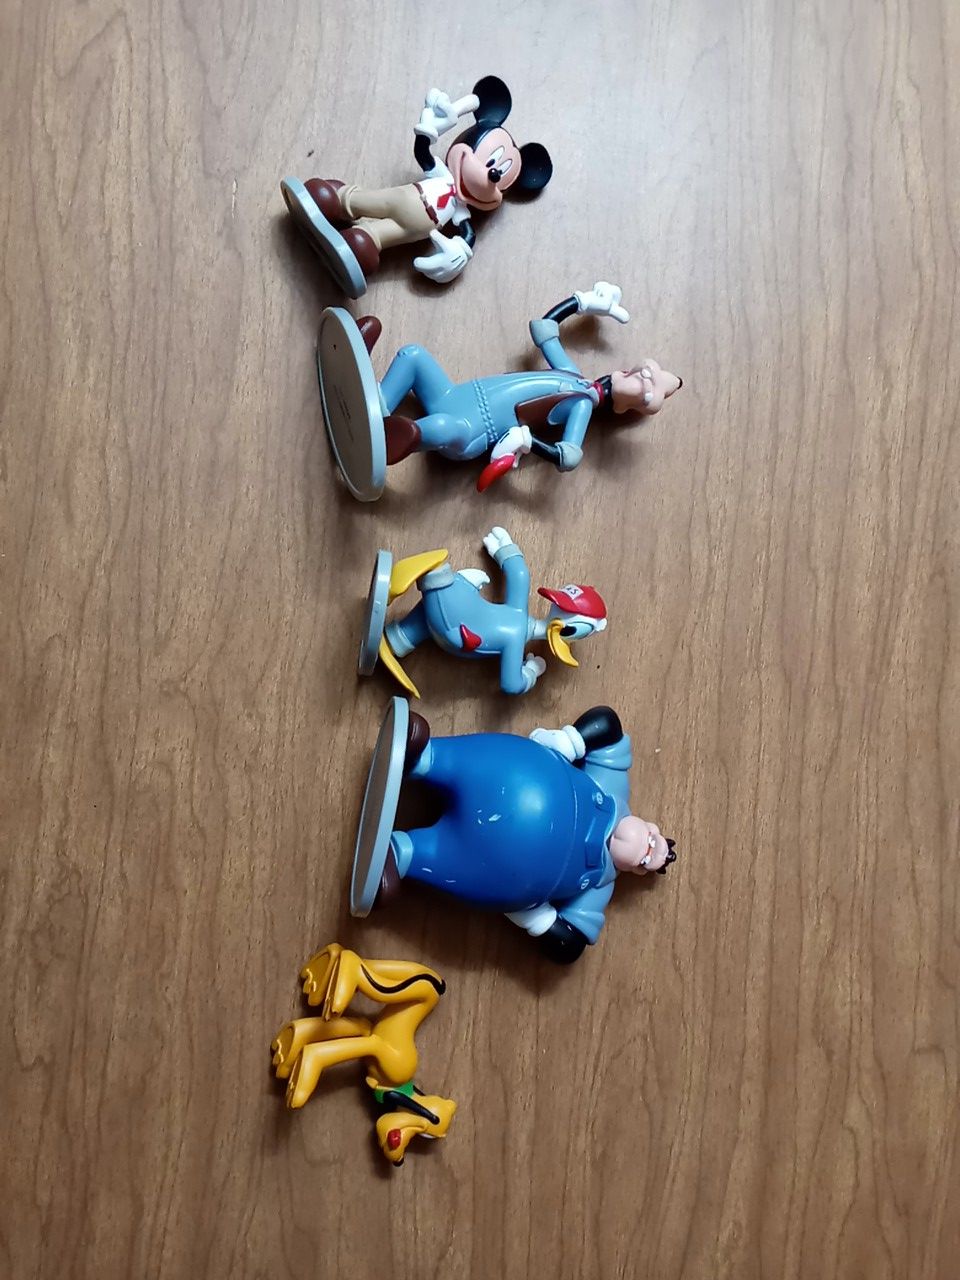 Mickey mouse vinyl figures